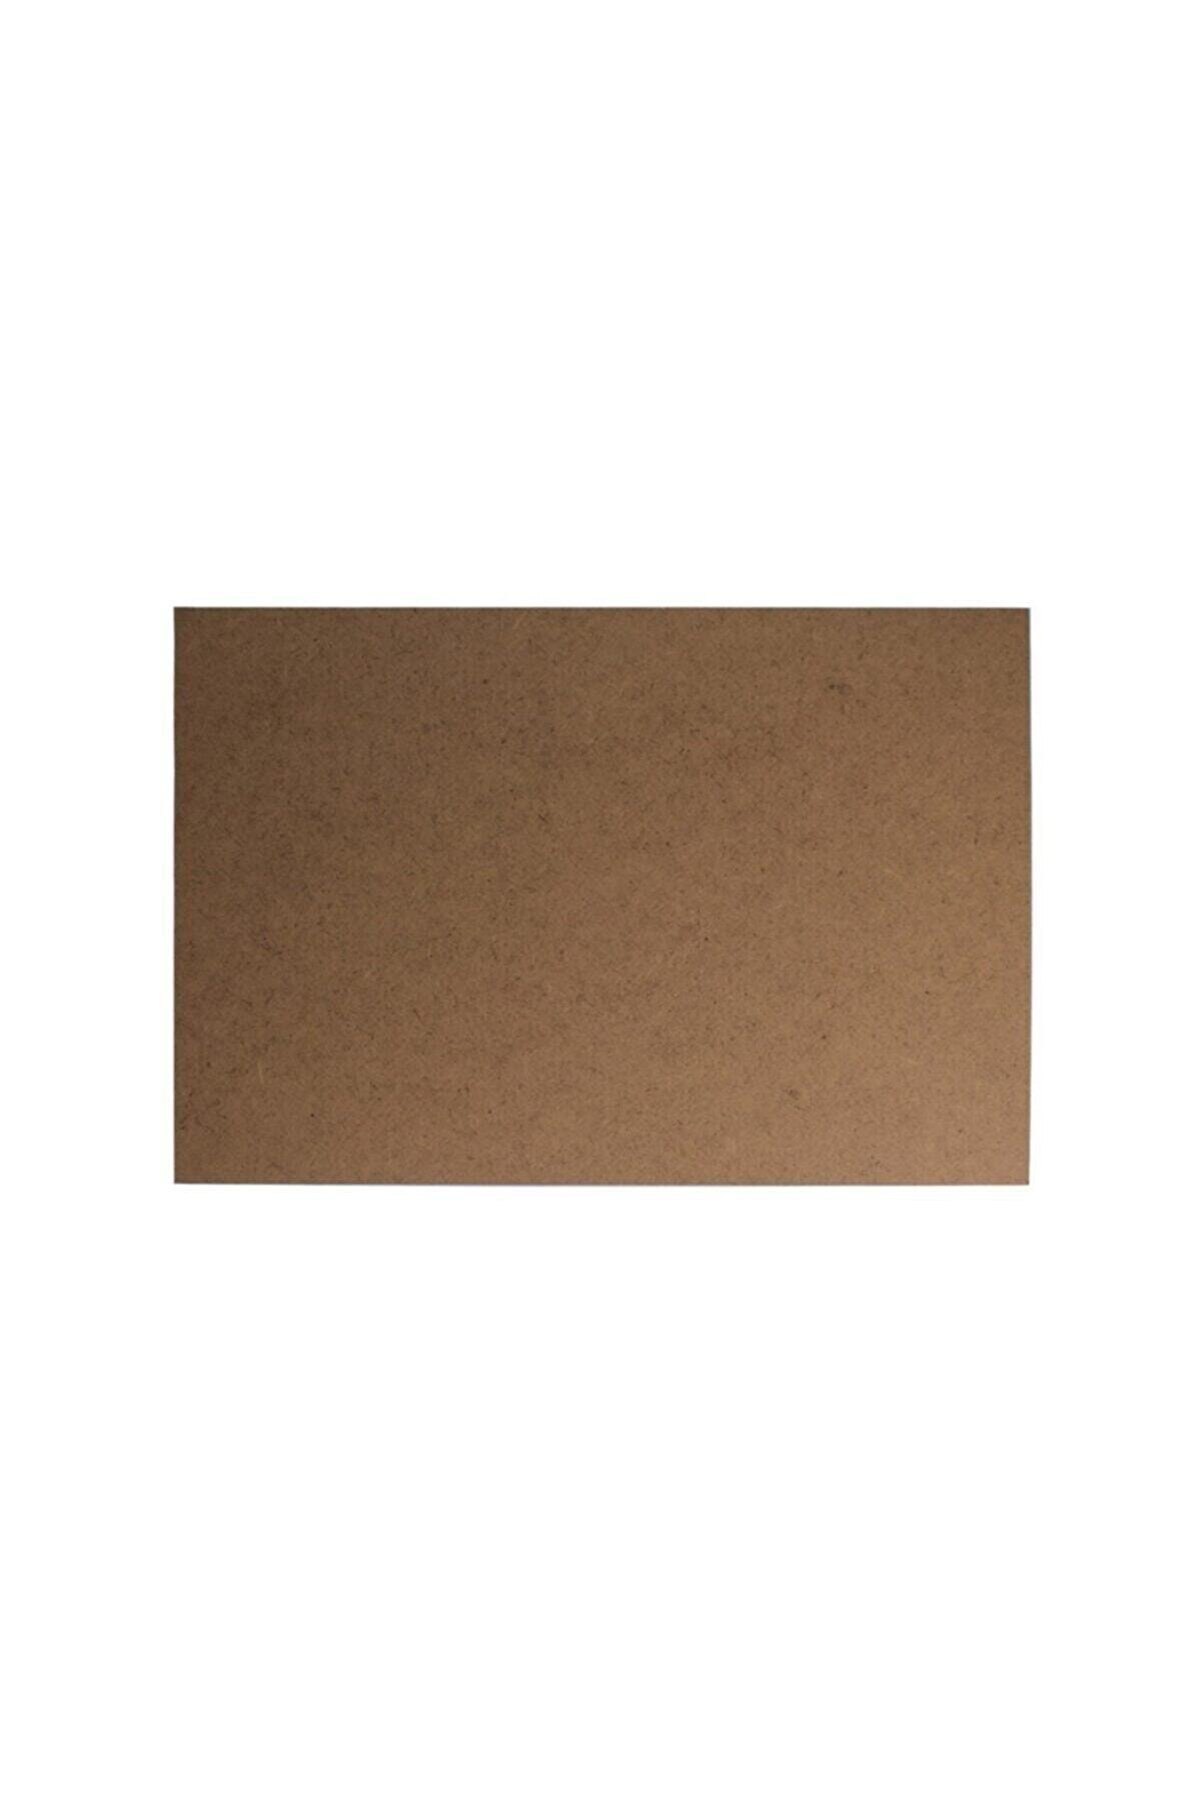 Ponart Duralit Mdf Levha 50x70 3mm Kalınlık -resim Altlığı Veya Puzzle Zemini